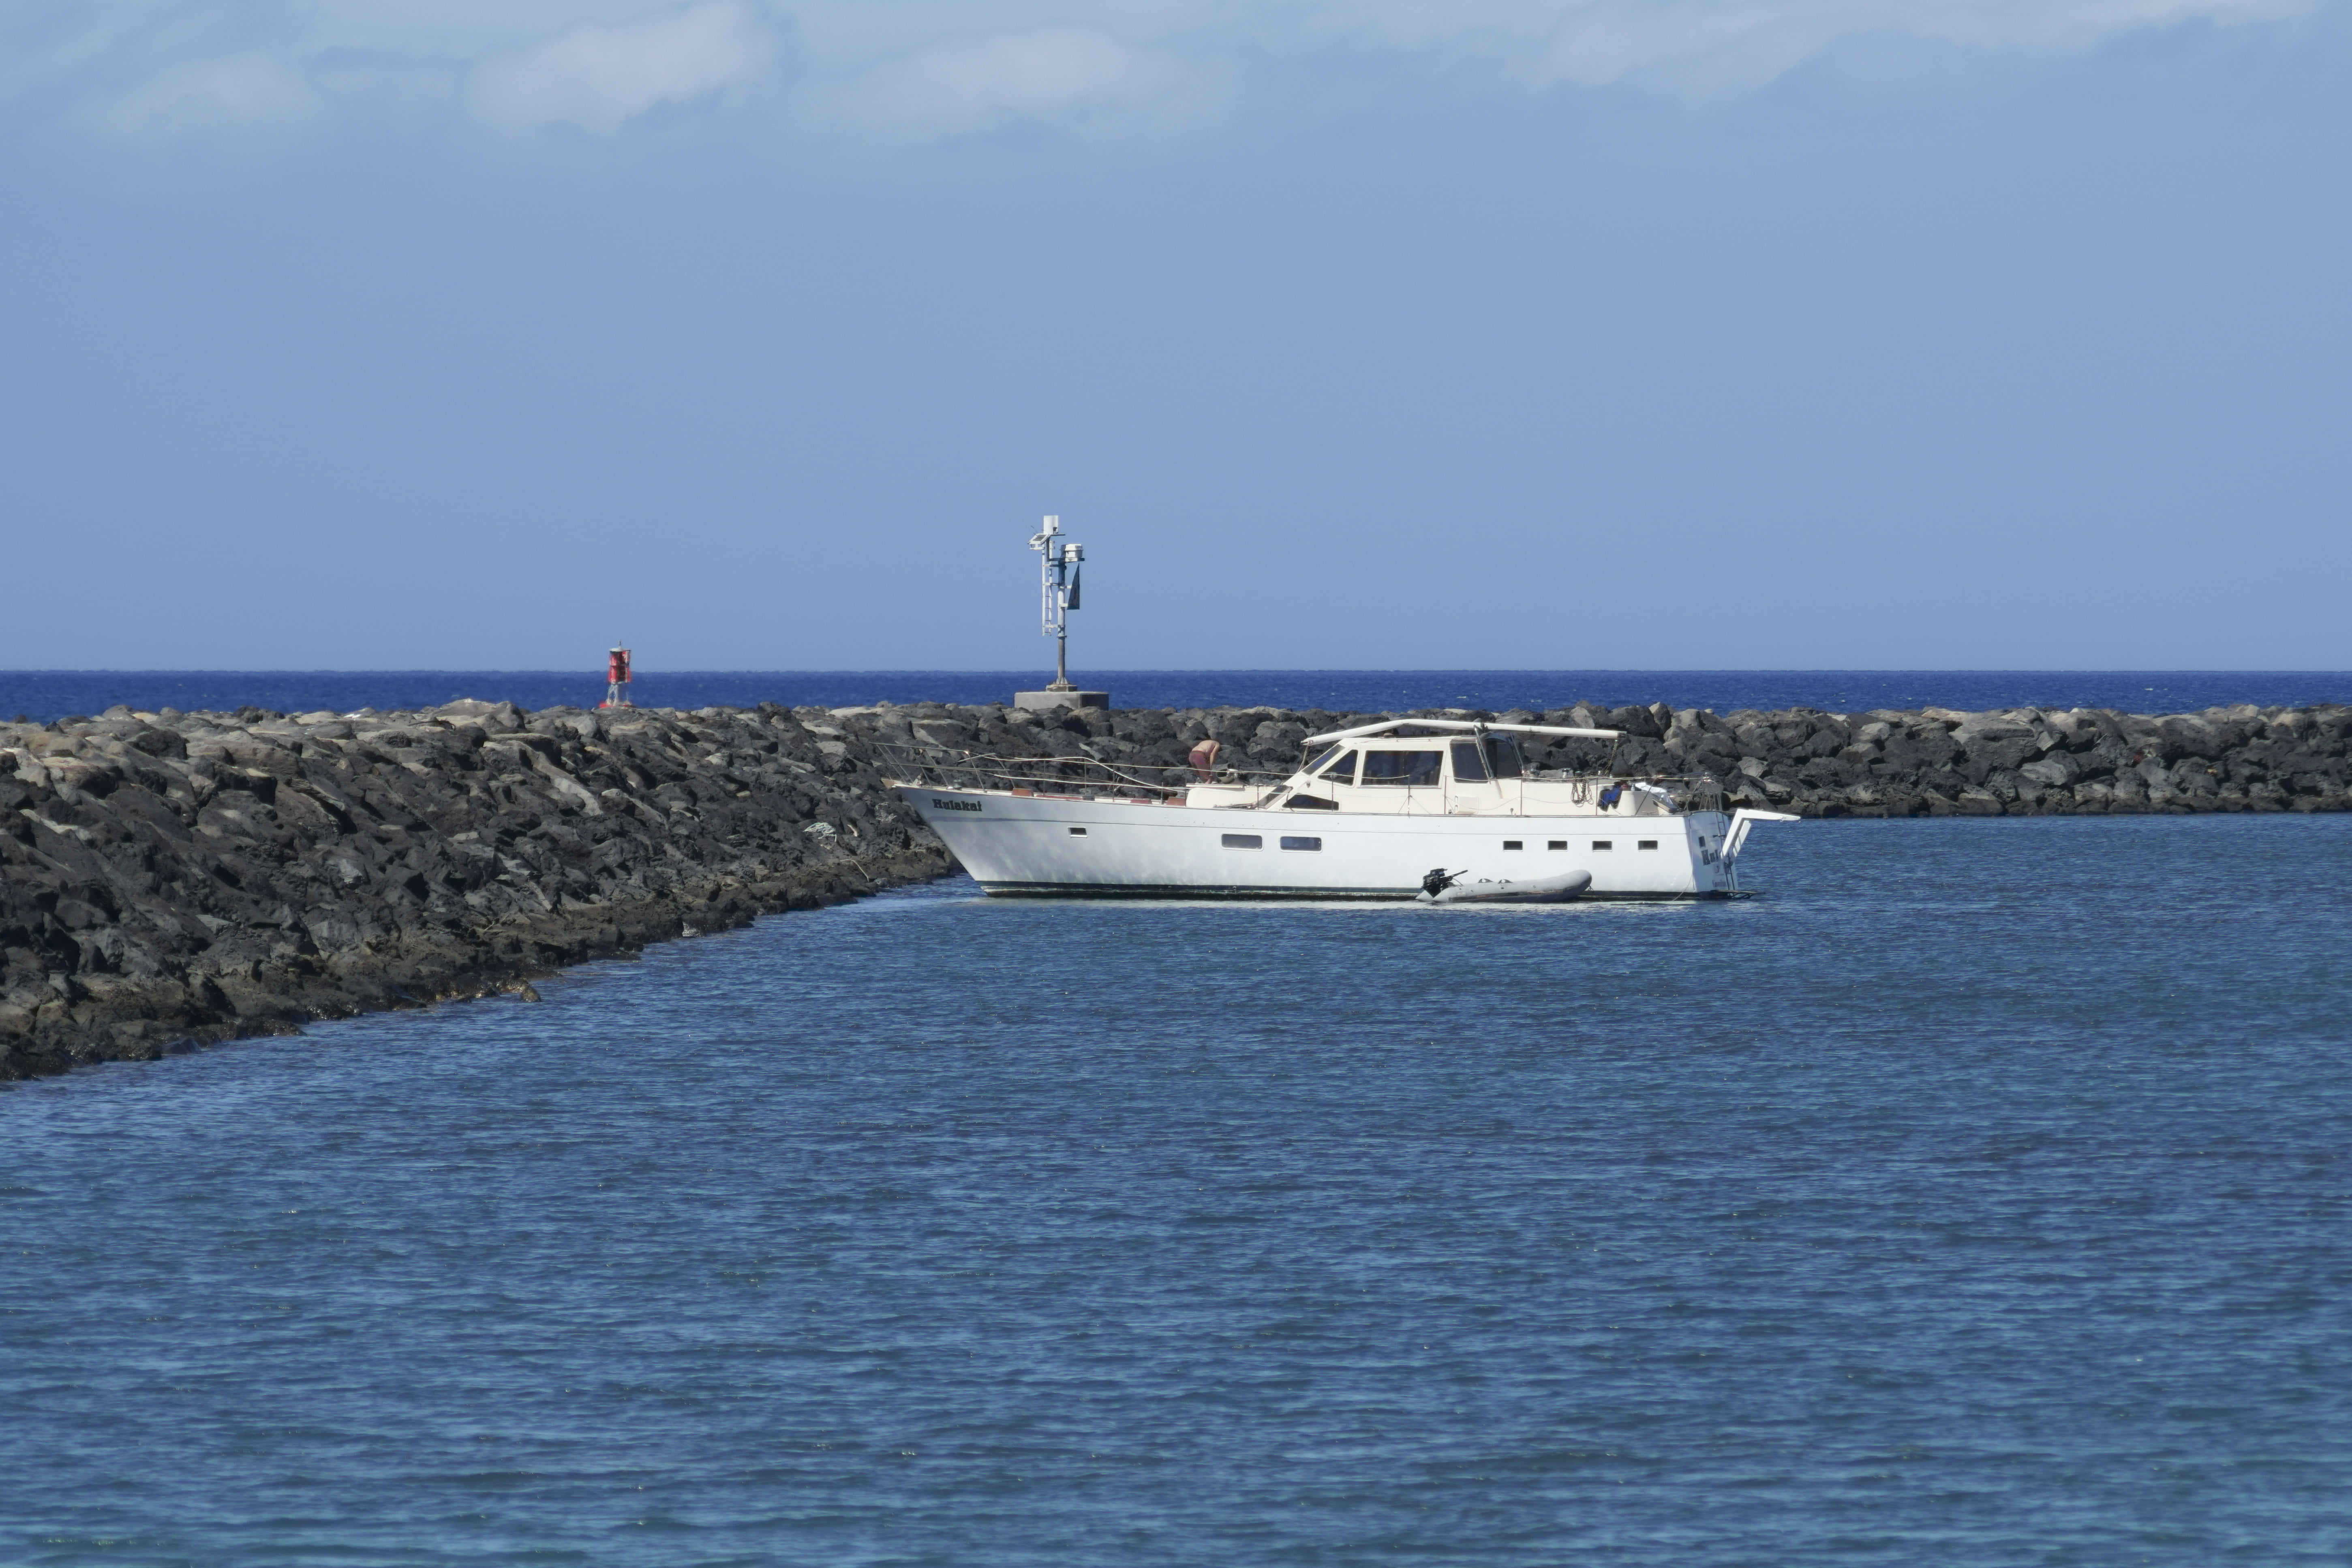 Boat Hulakai ran aground on coral reef